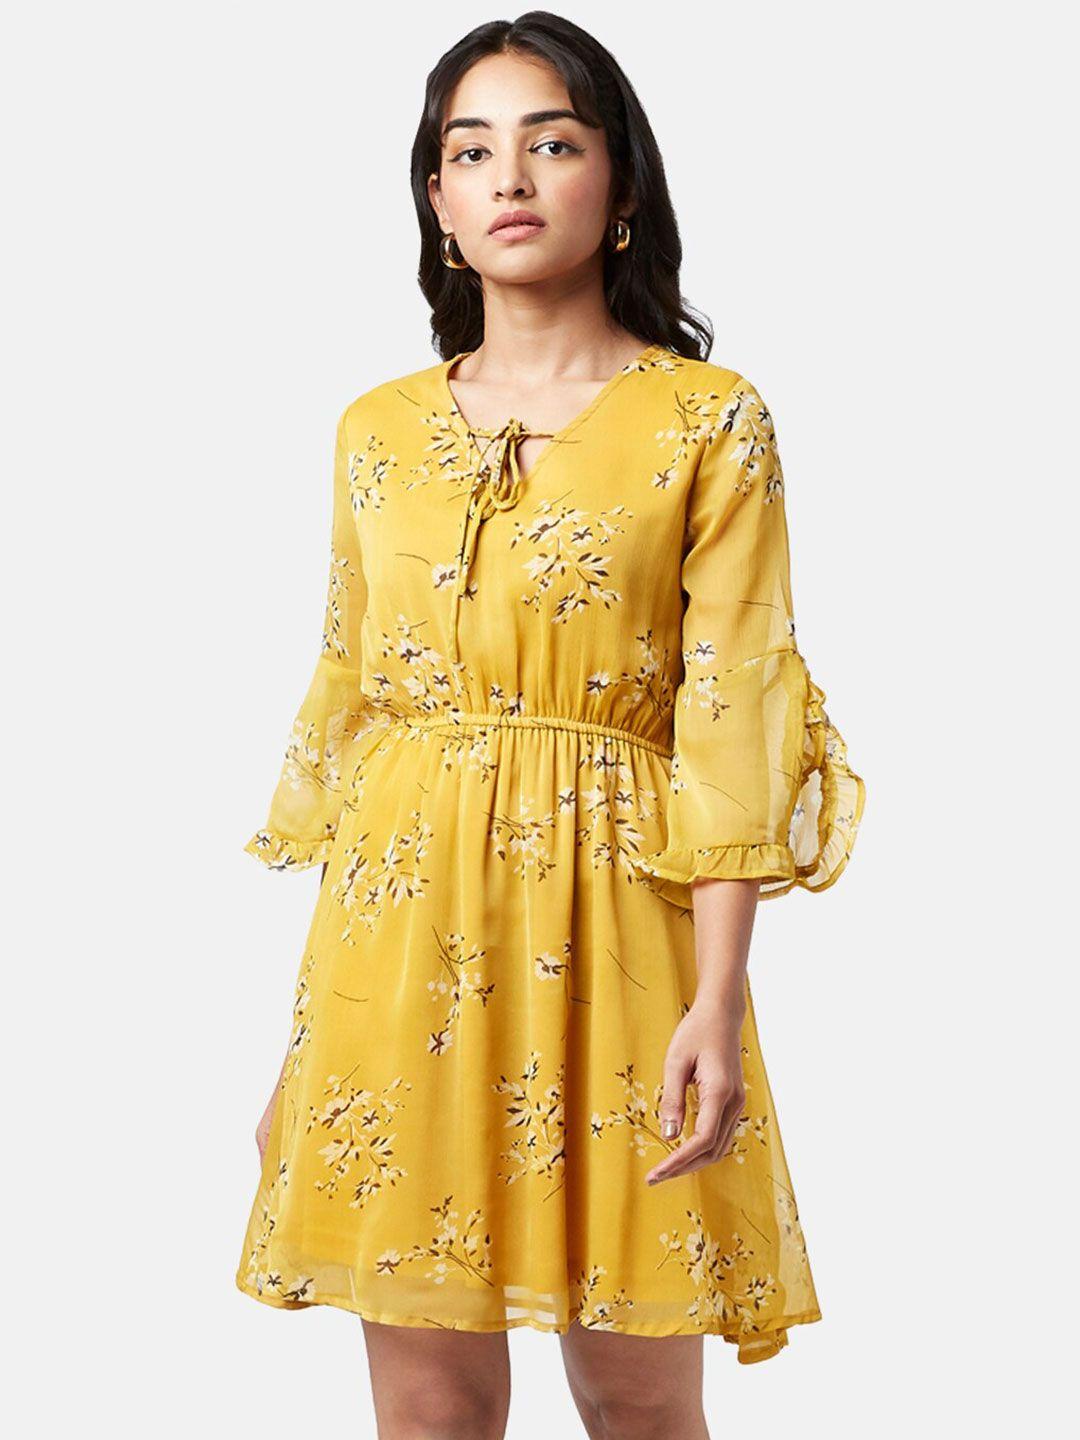 yu-by-pantaloons-mustard-yellow-floral-keyhole-neck-ethnic-dress